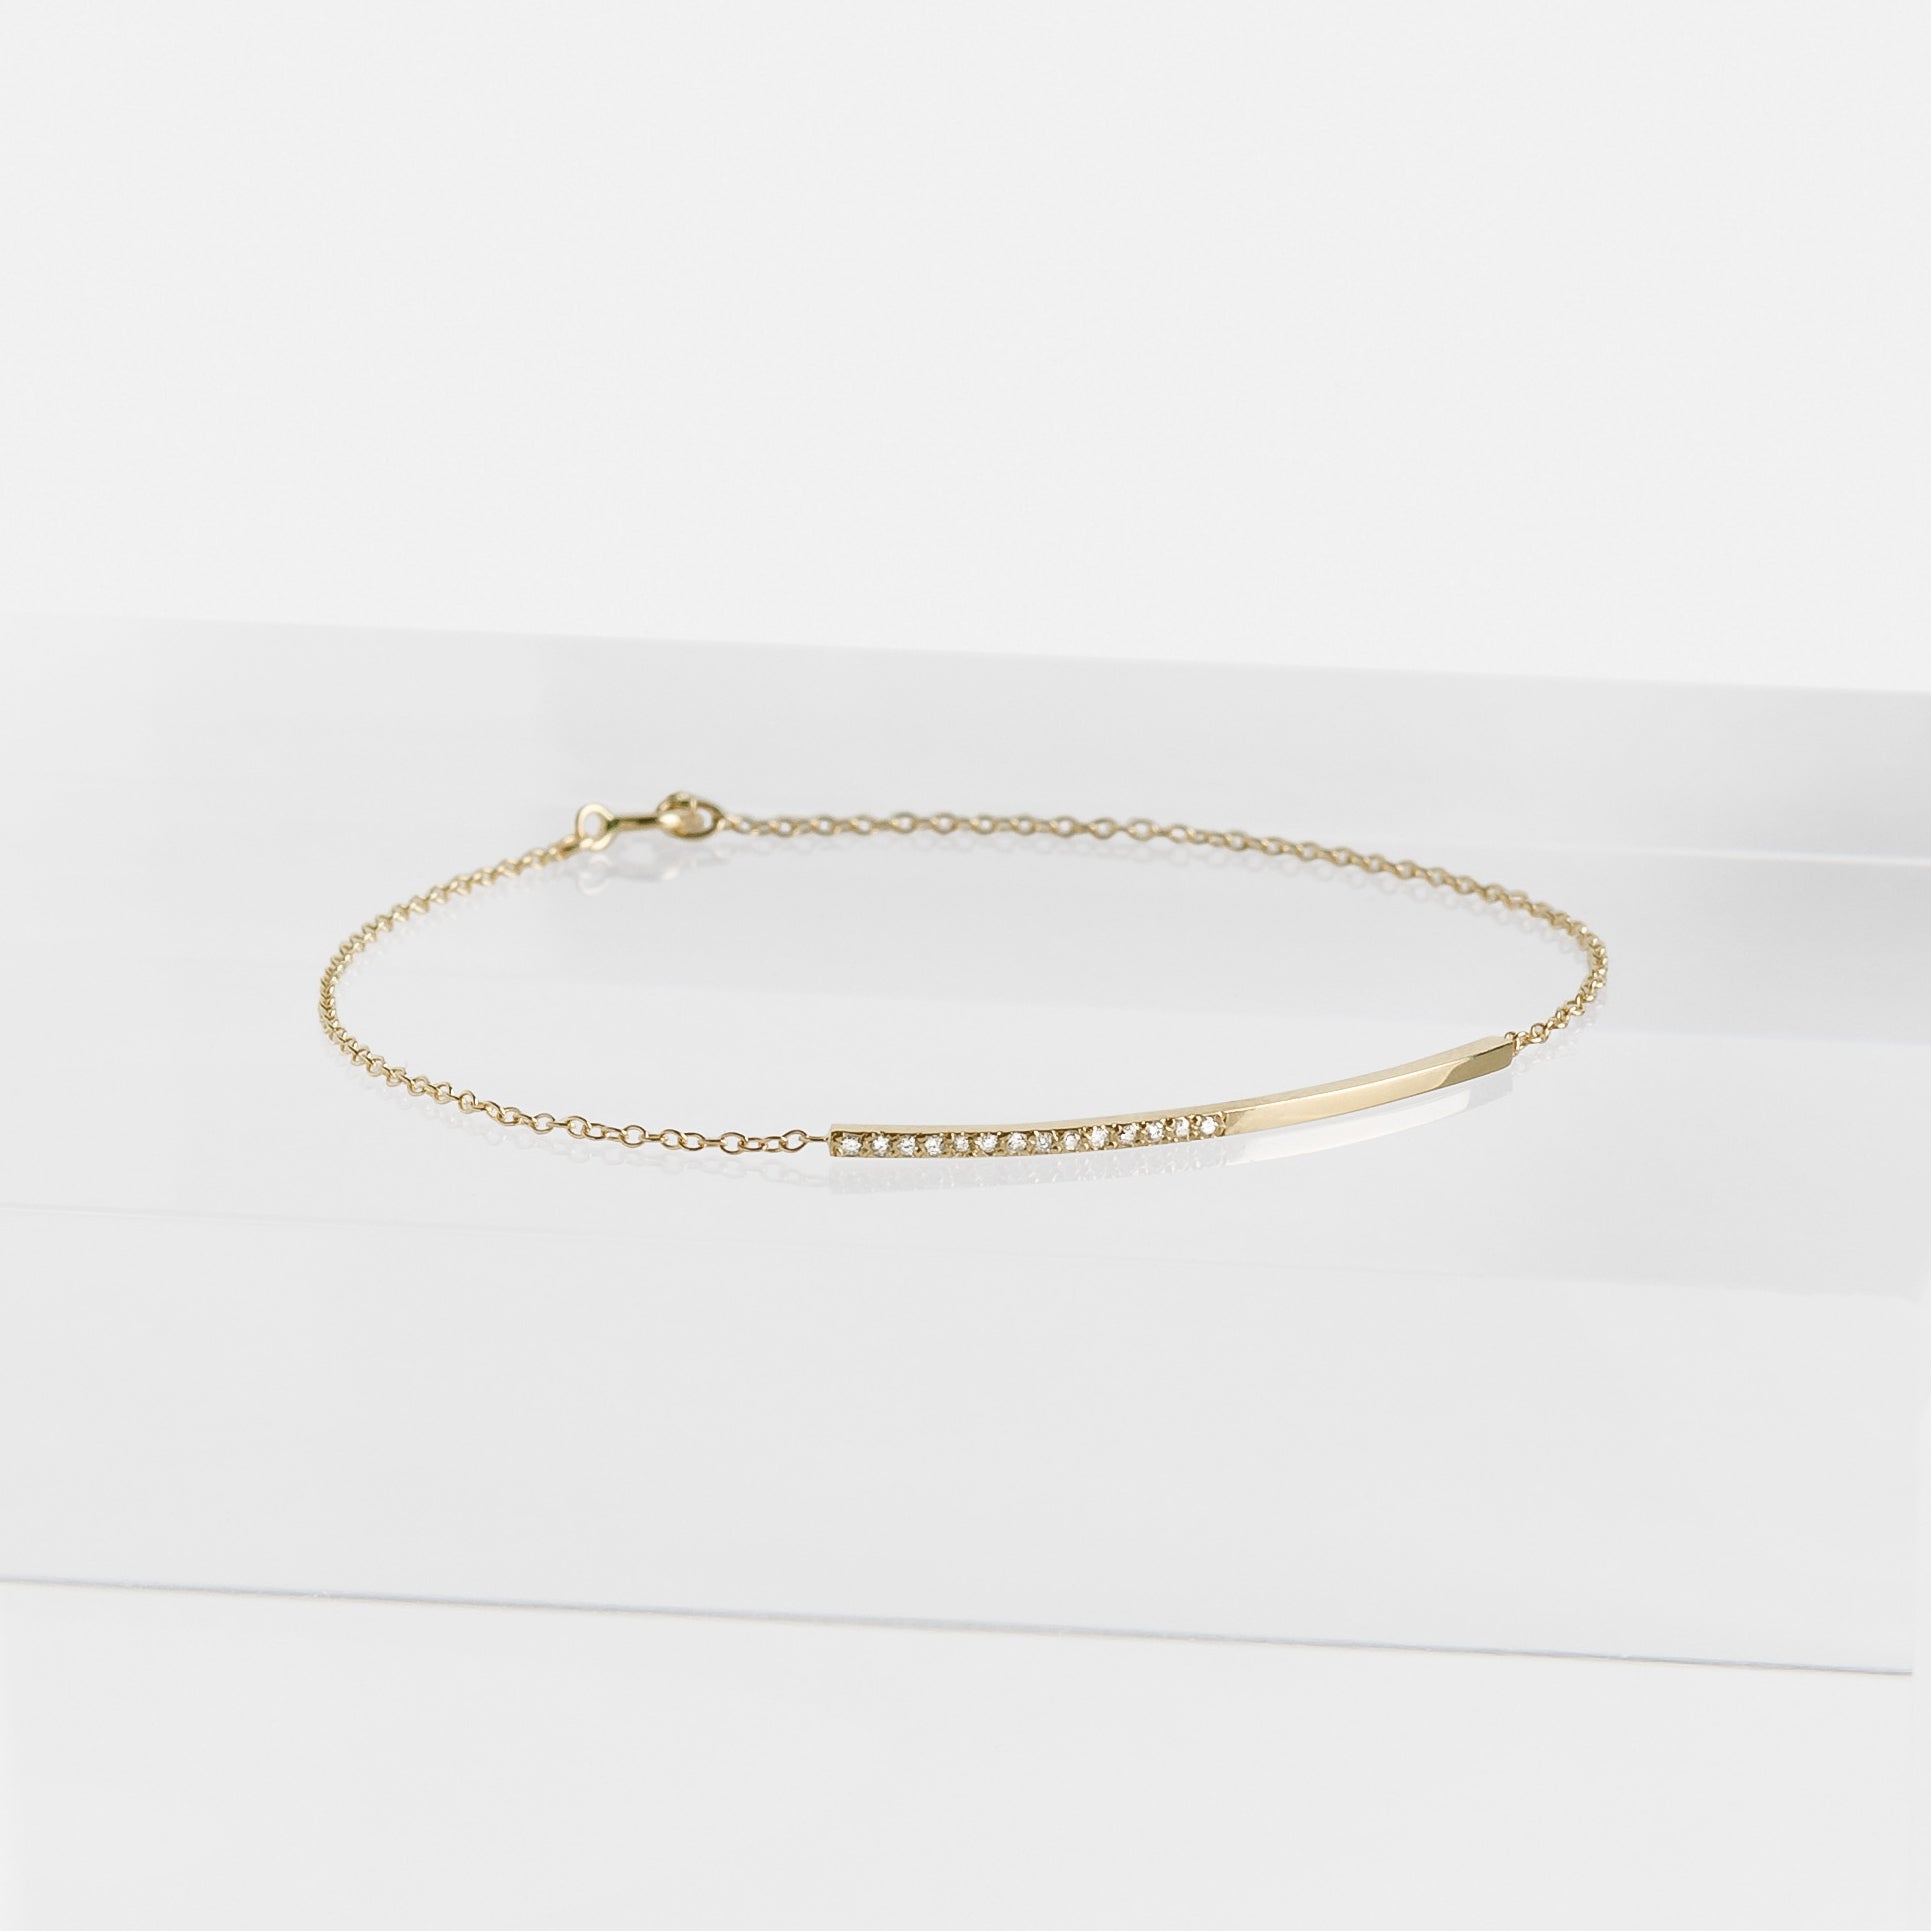 Iva Designer Bracelet in 14k Gold set with White Diamonds By SHW Fine Jewelry NYC